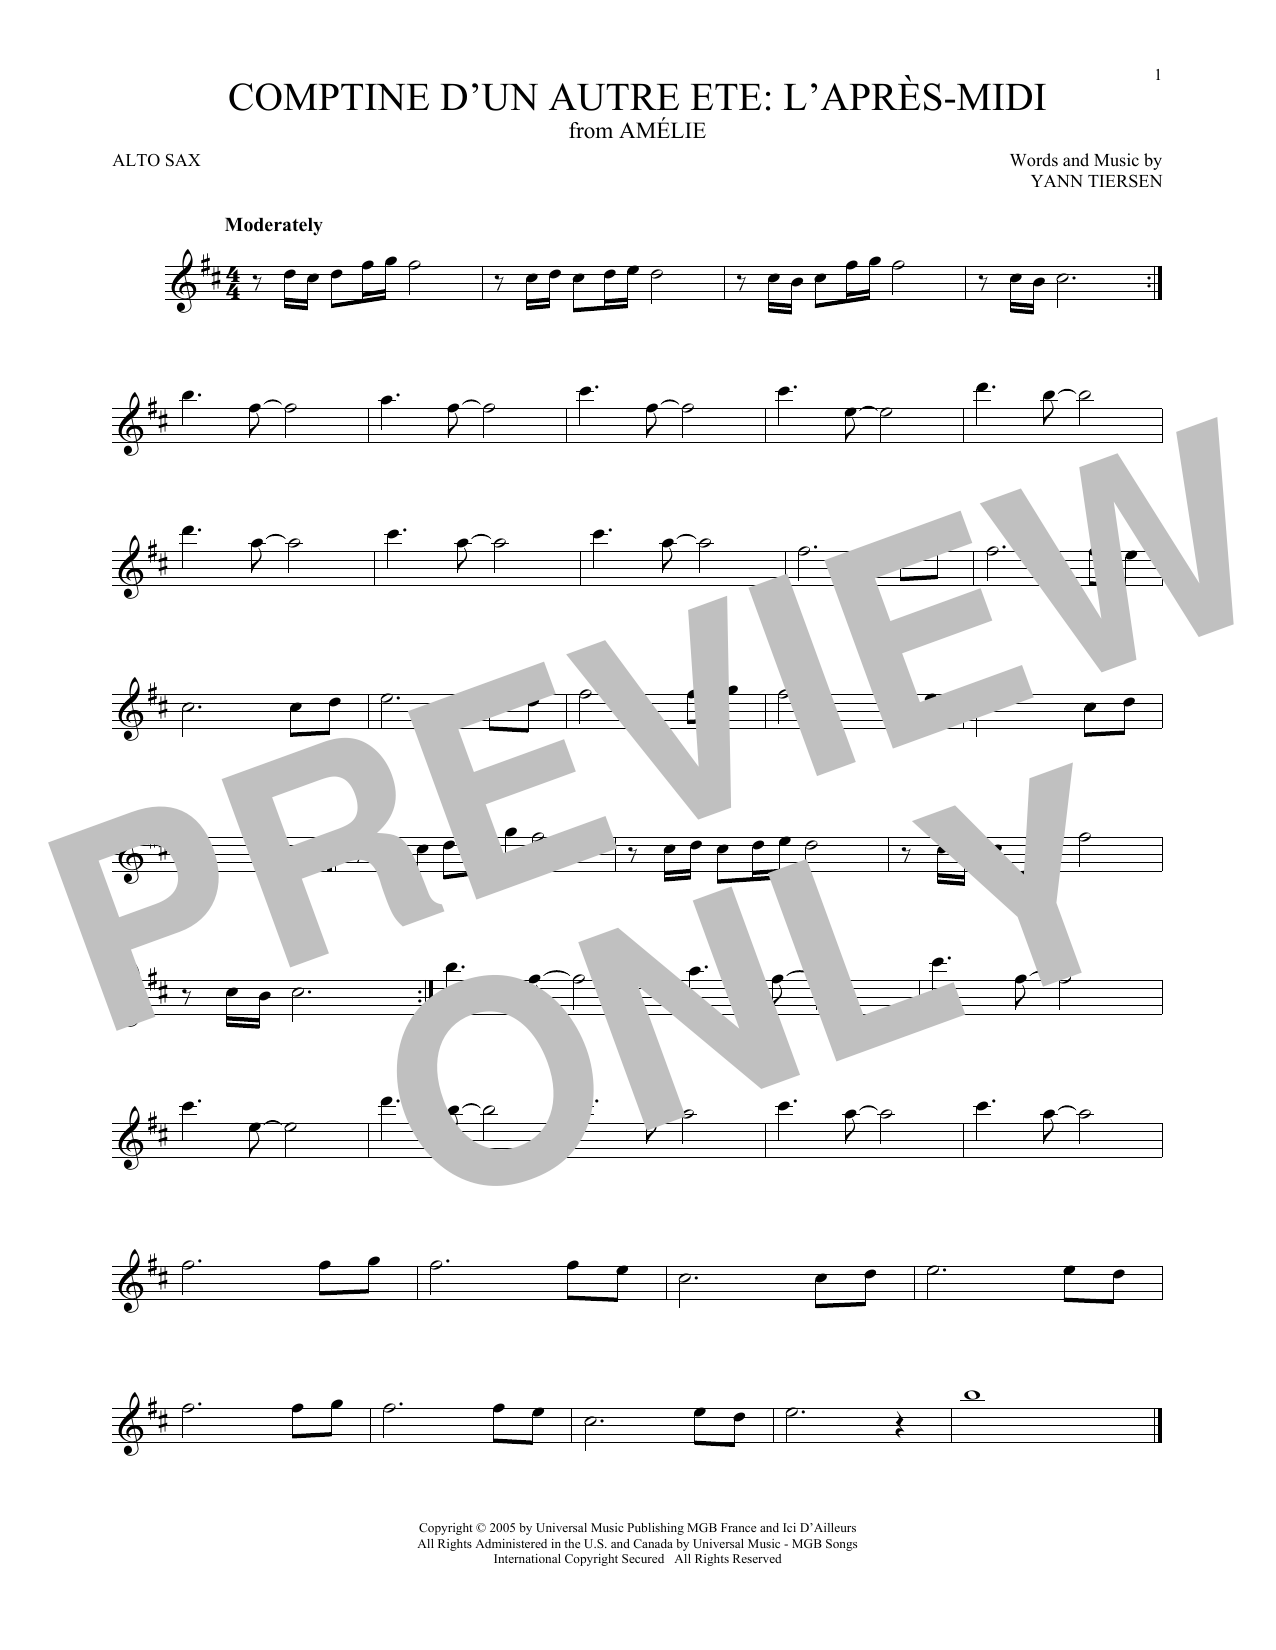 Download Yann Tiersen Comptine d'un autre été: L'après-midi (from Amelie) Sheet Music and learn how to play French Horn Solo PDF digital score in minutes